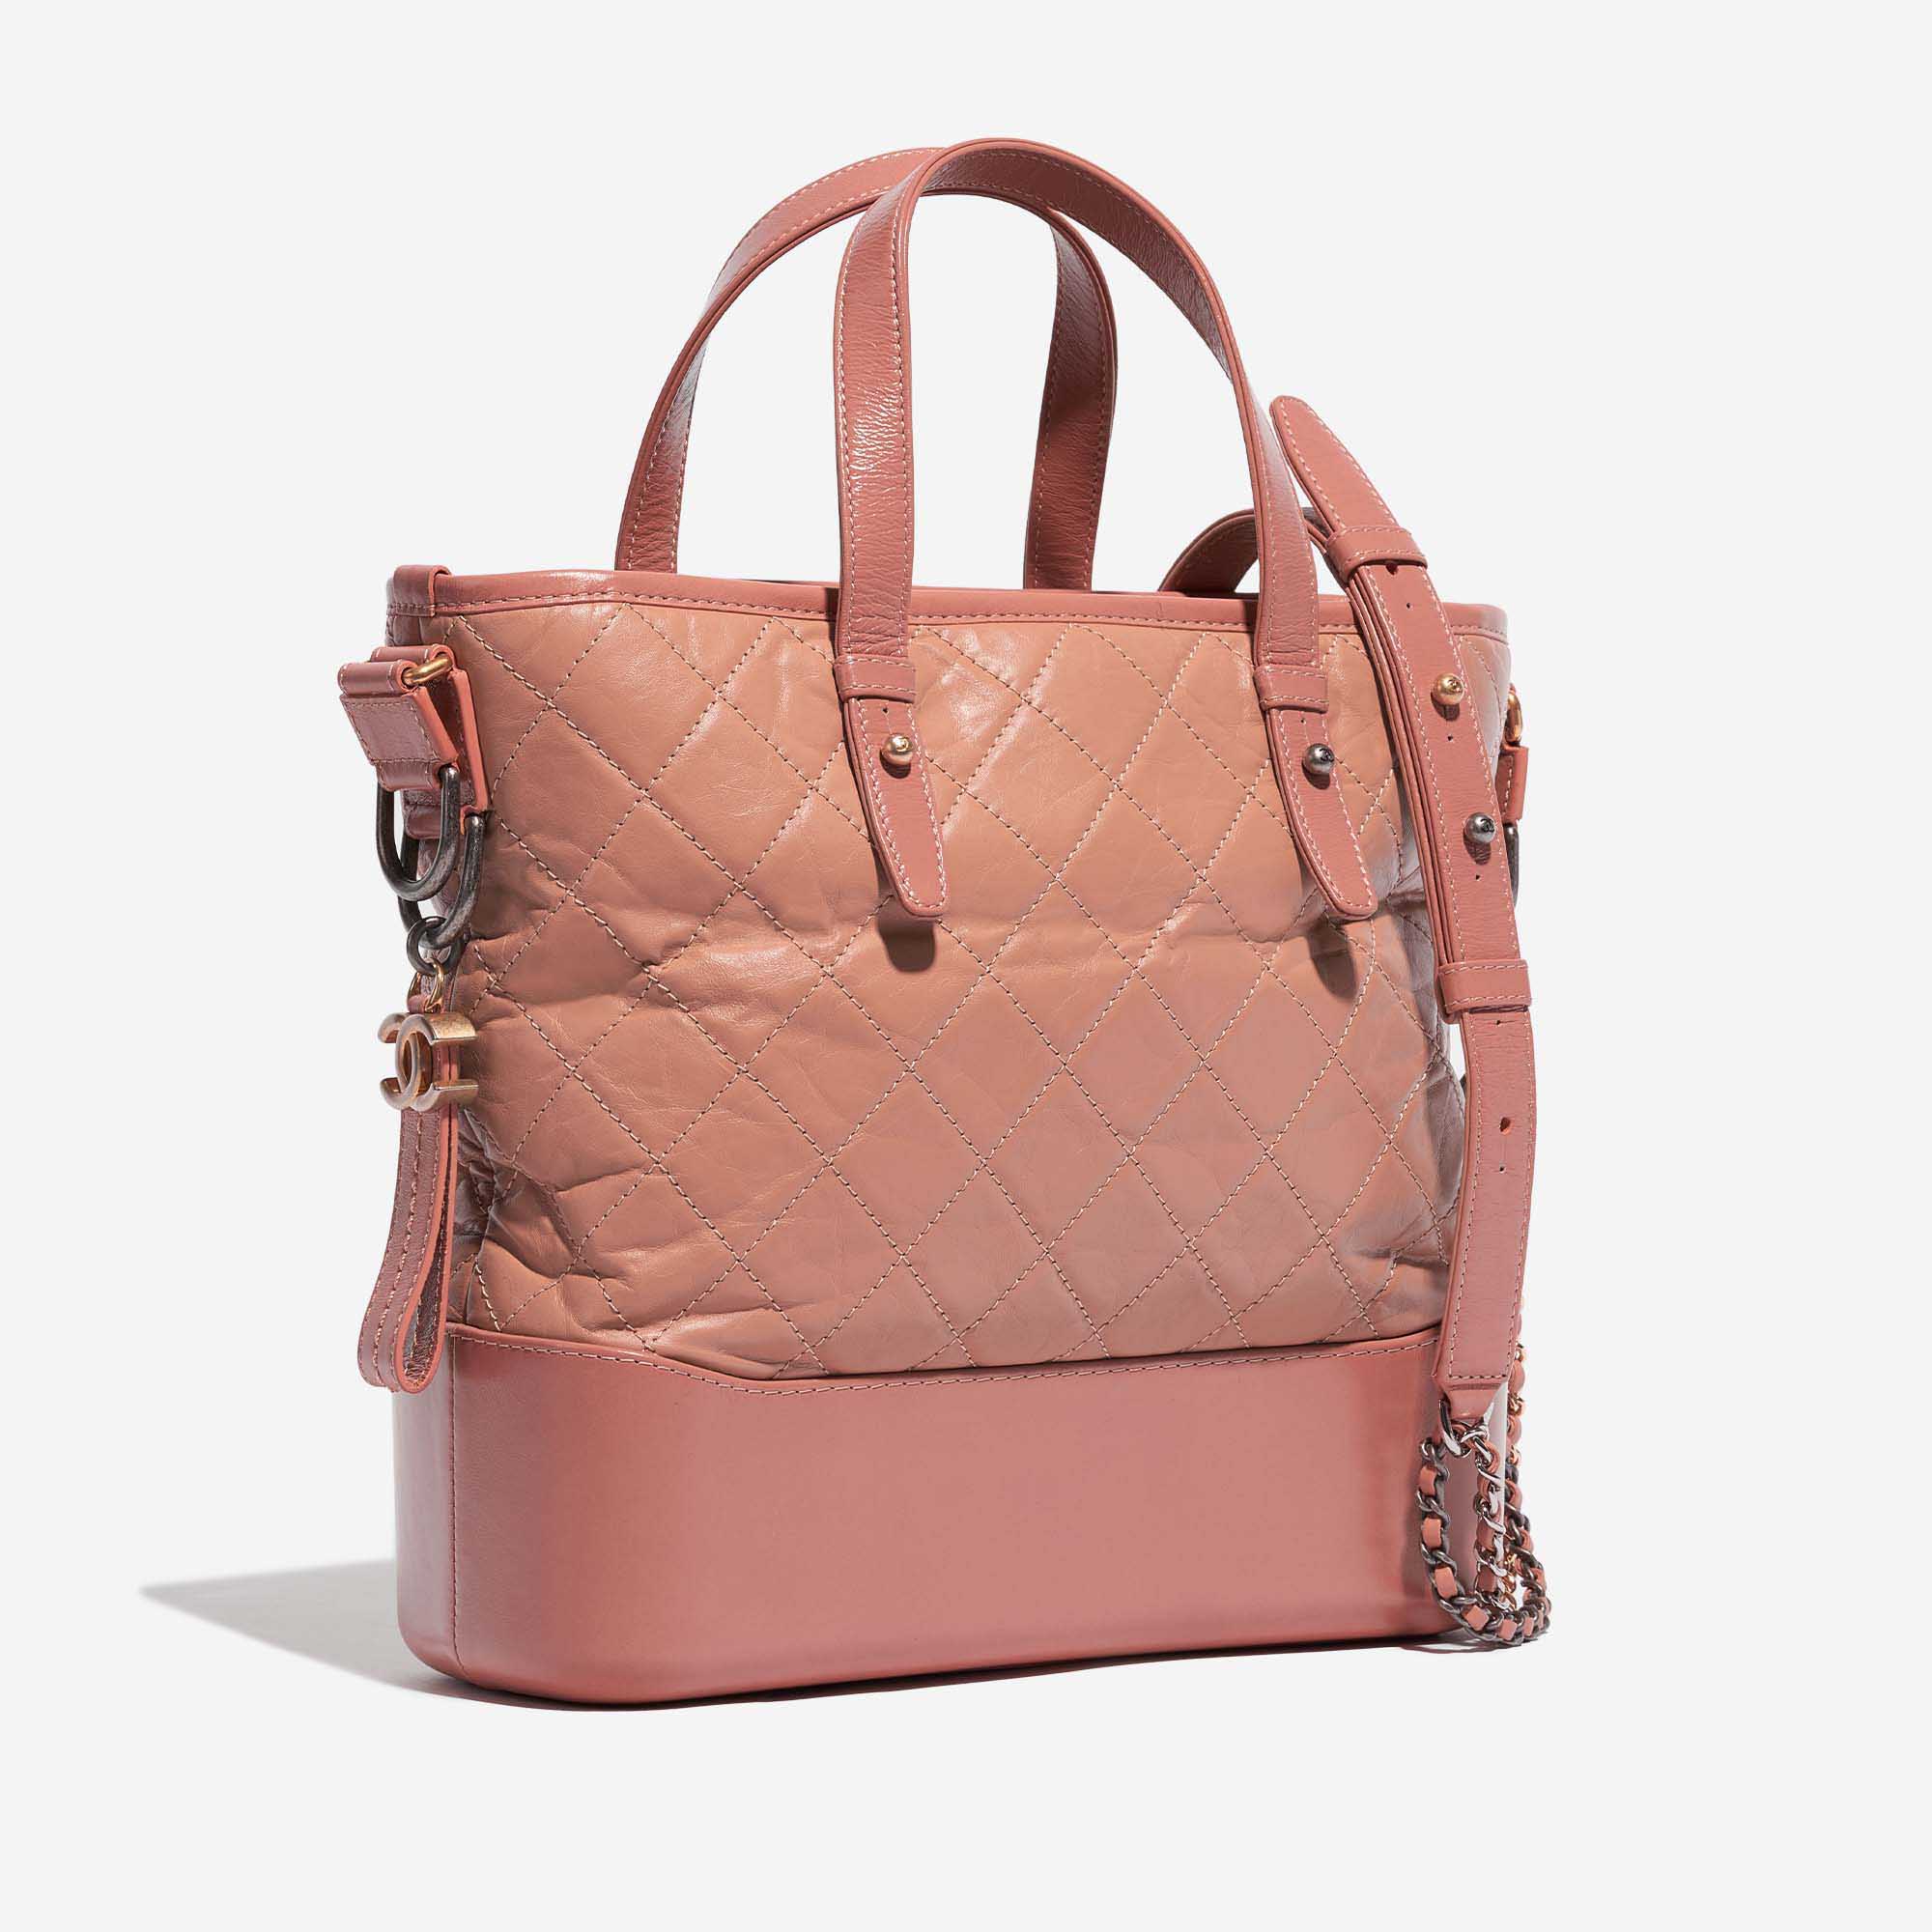 Pre-owned Chanel bag Gabrielle Handle Calf Beige / Dust Rose Beige, Rose Side Front | Sell your designer bag on Saclab.com